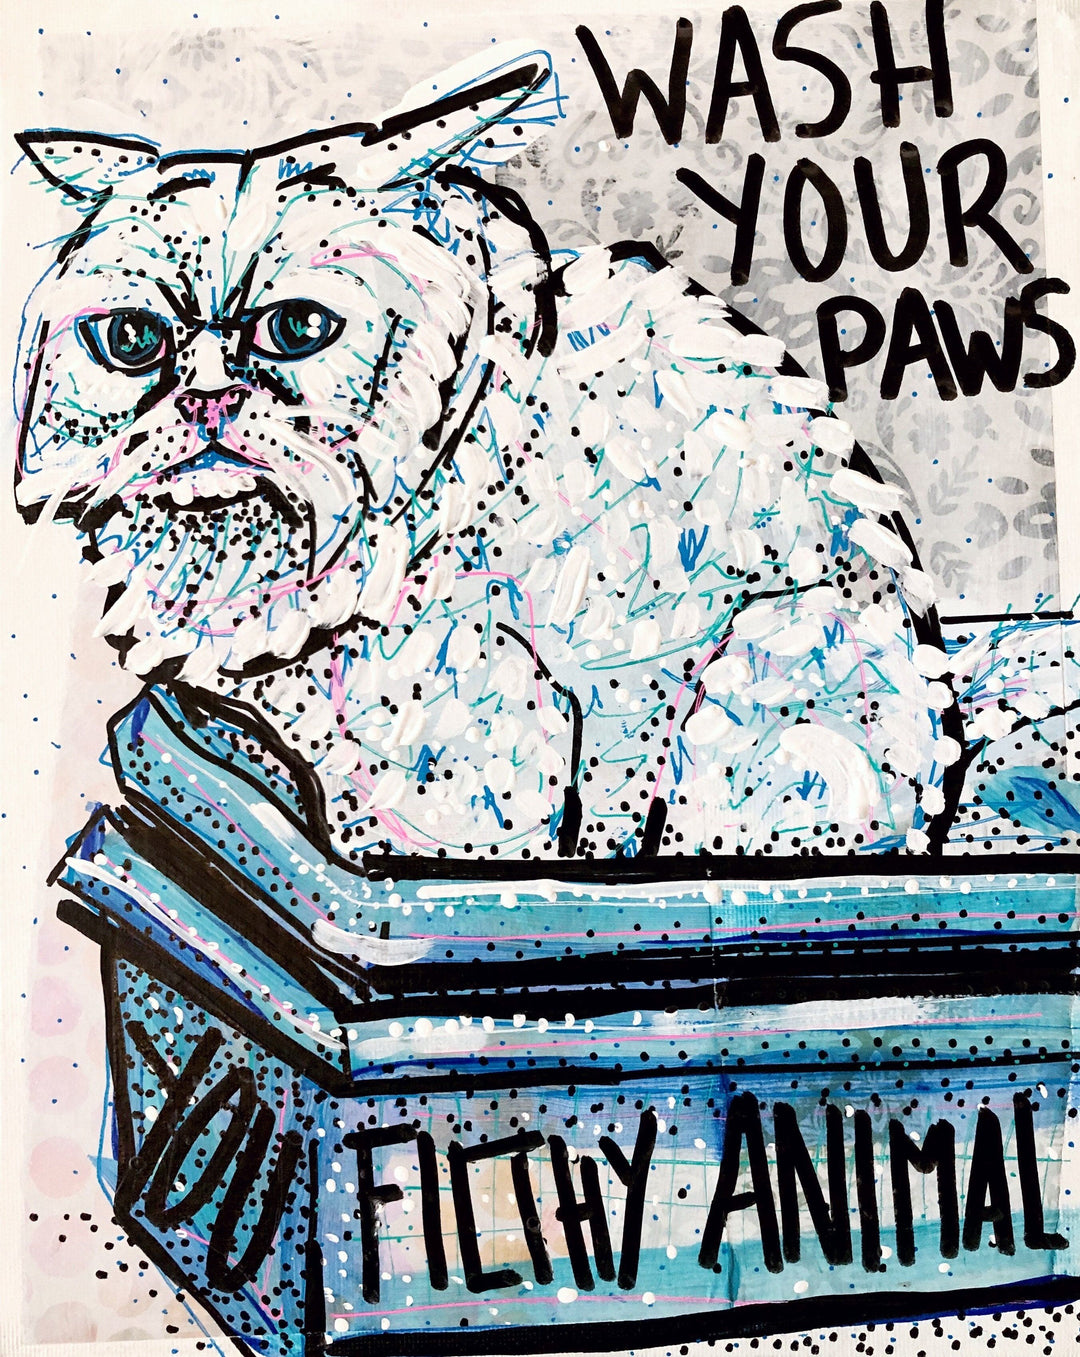 Wash Your Paws You Filthy Animal- Litter Box Edition Heather Freitas 